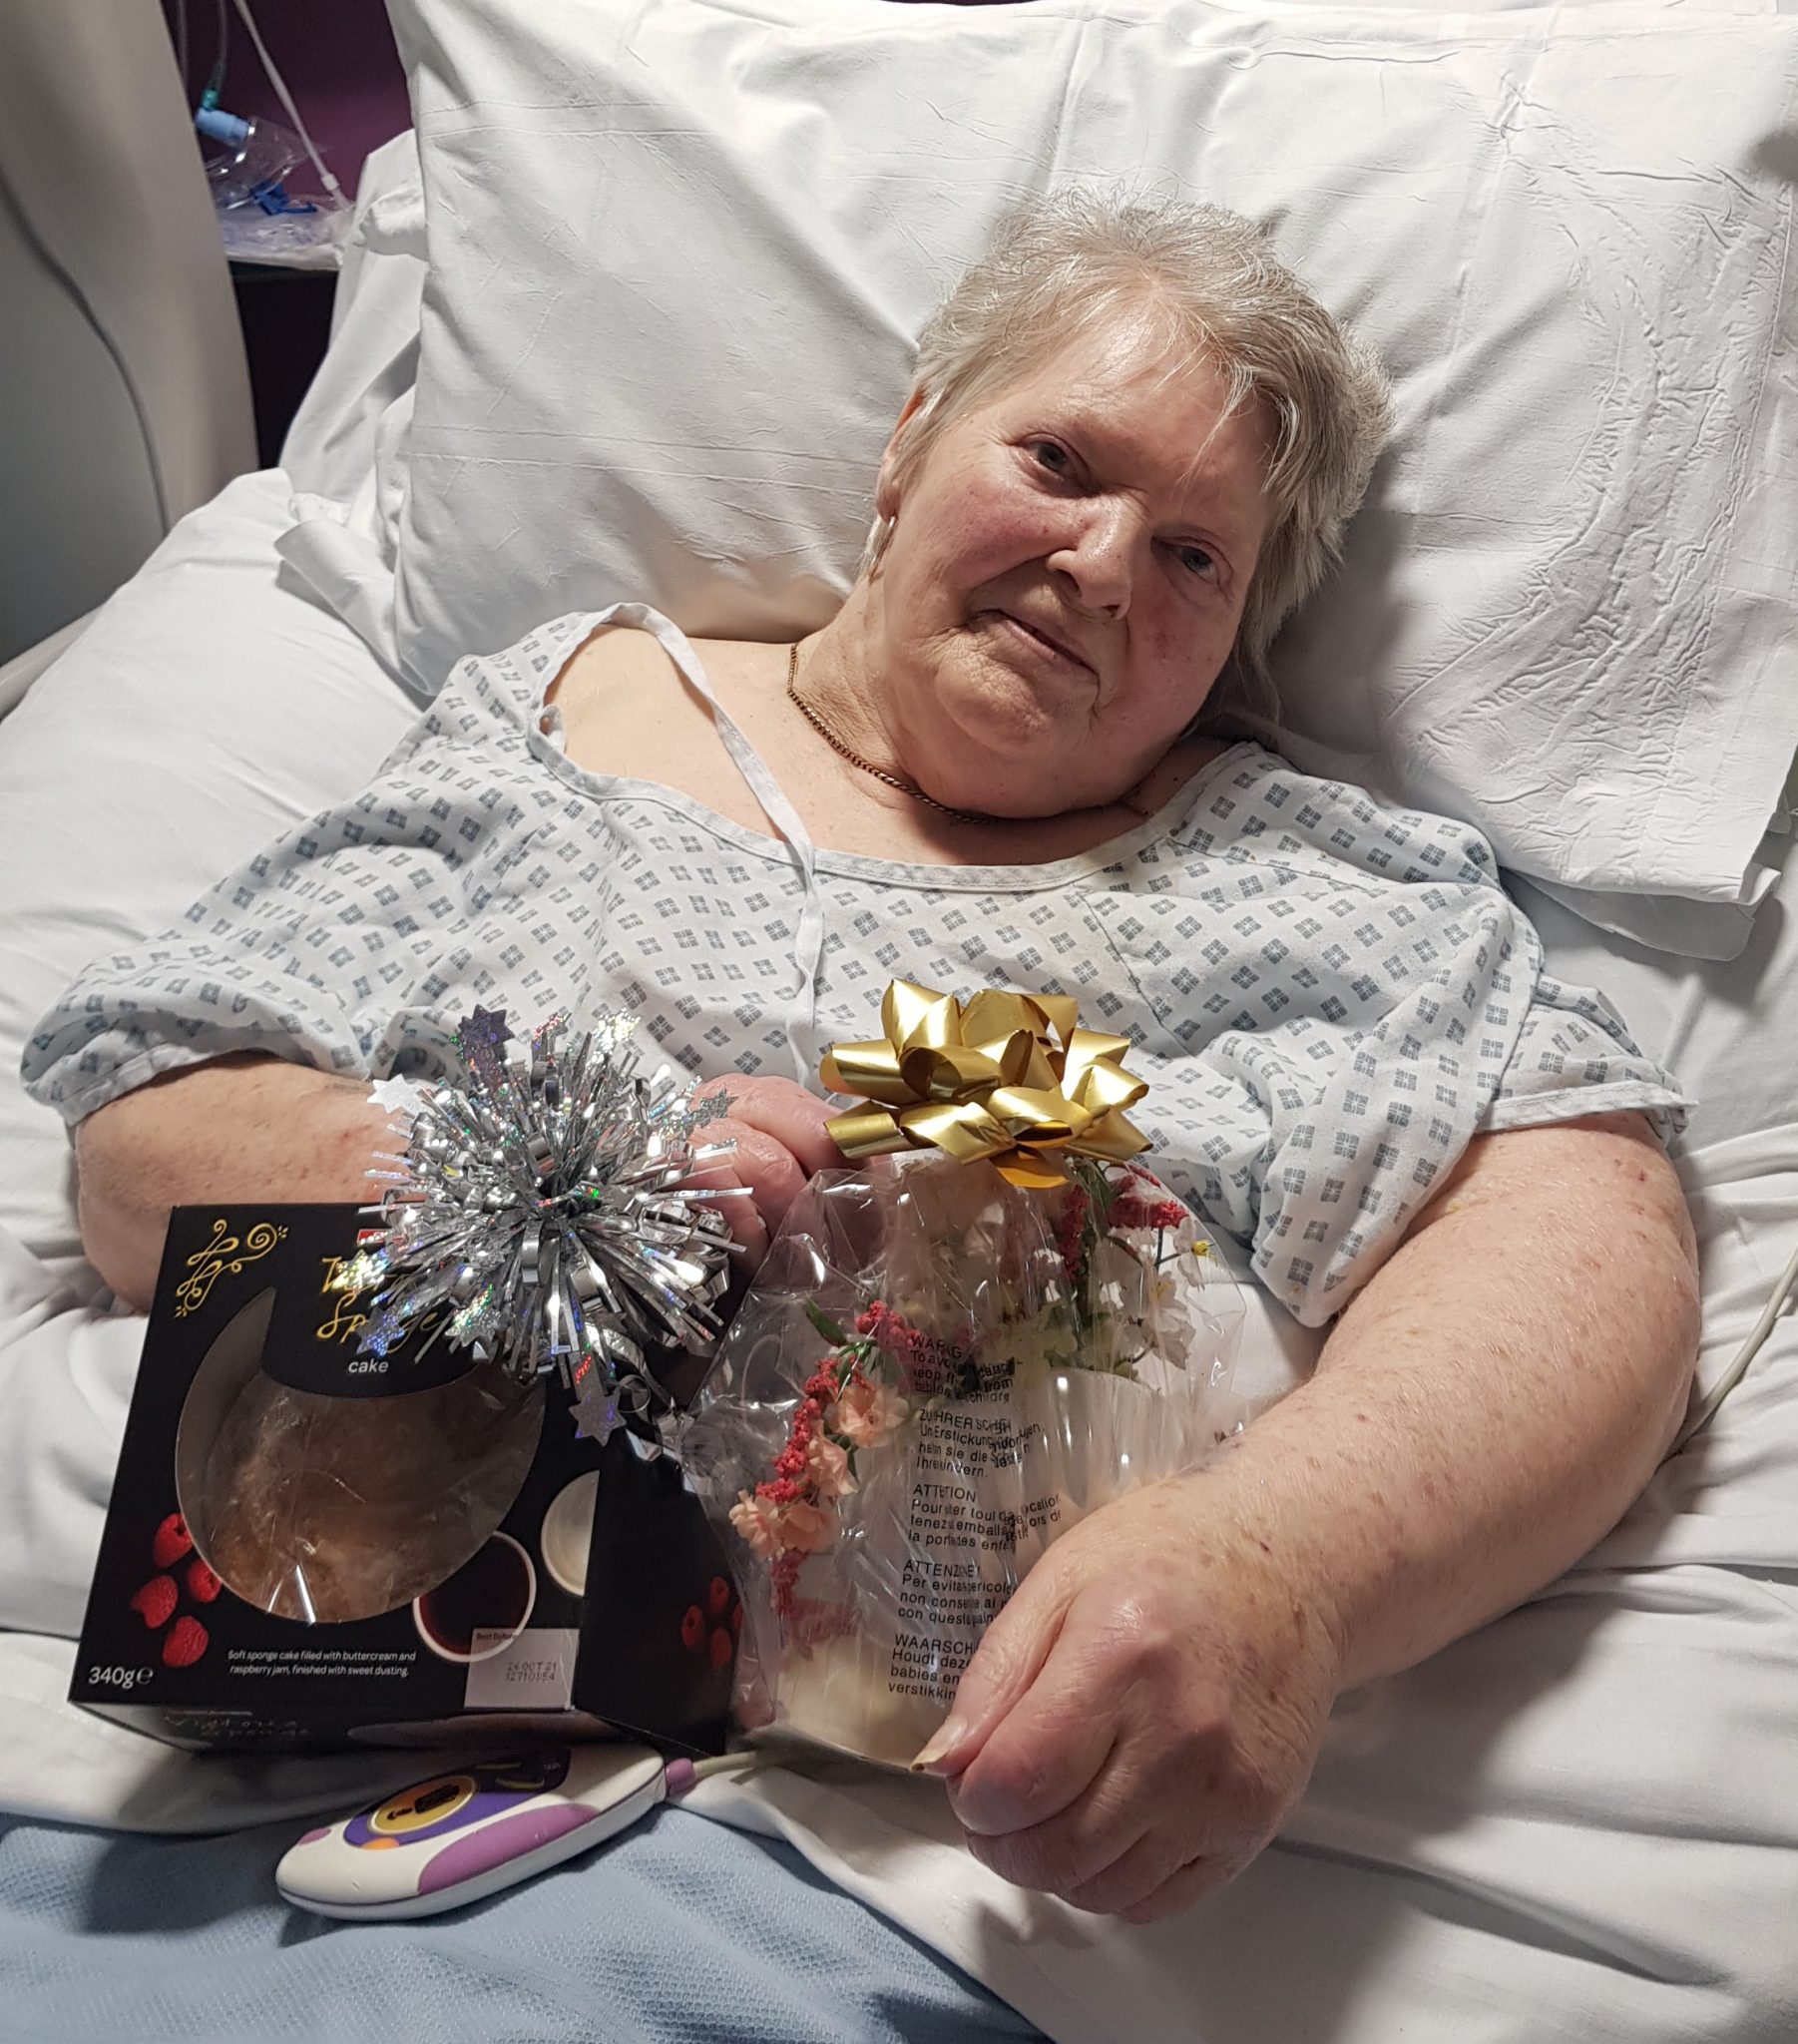 Patient Ann had a birthday surprise